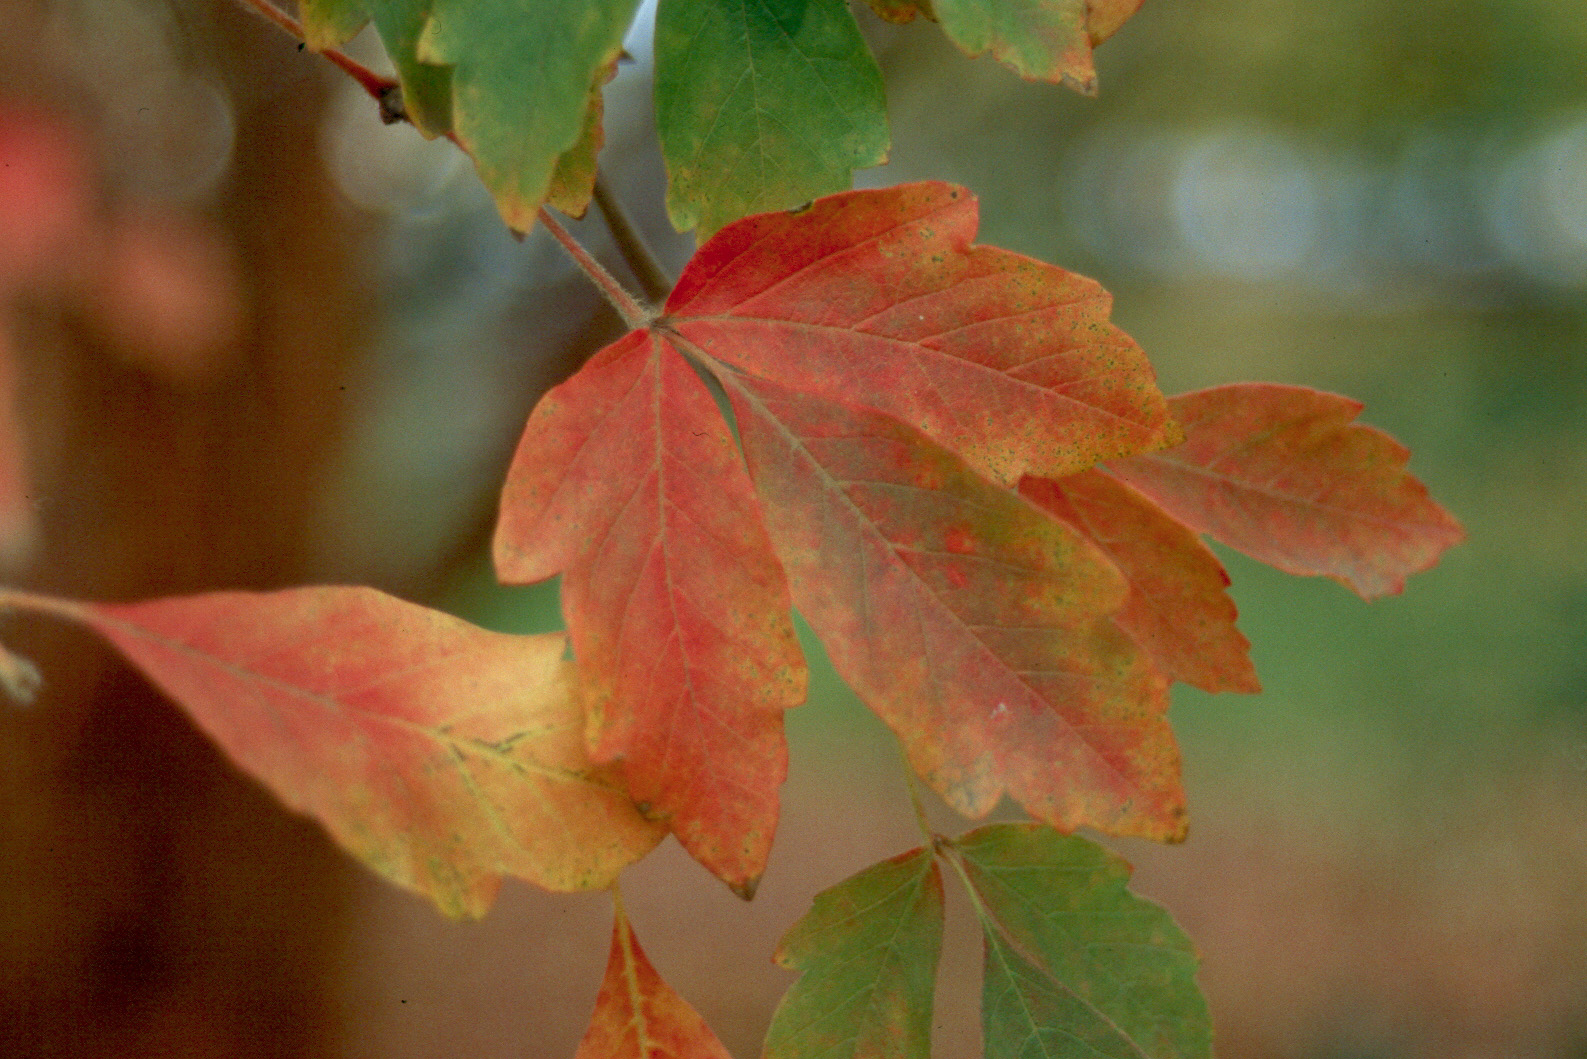 Paperbark maple leaves